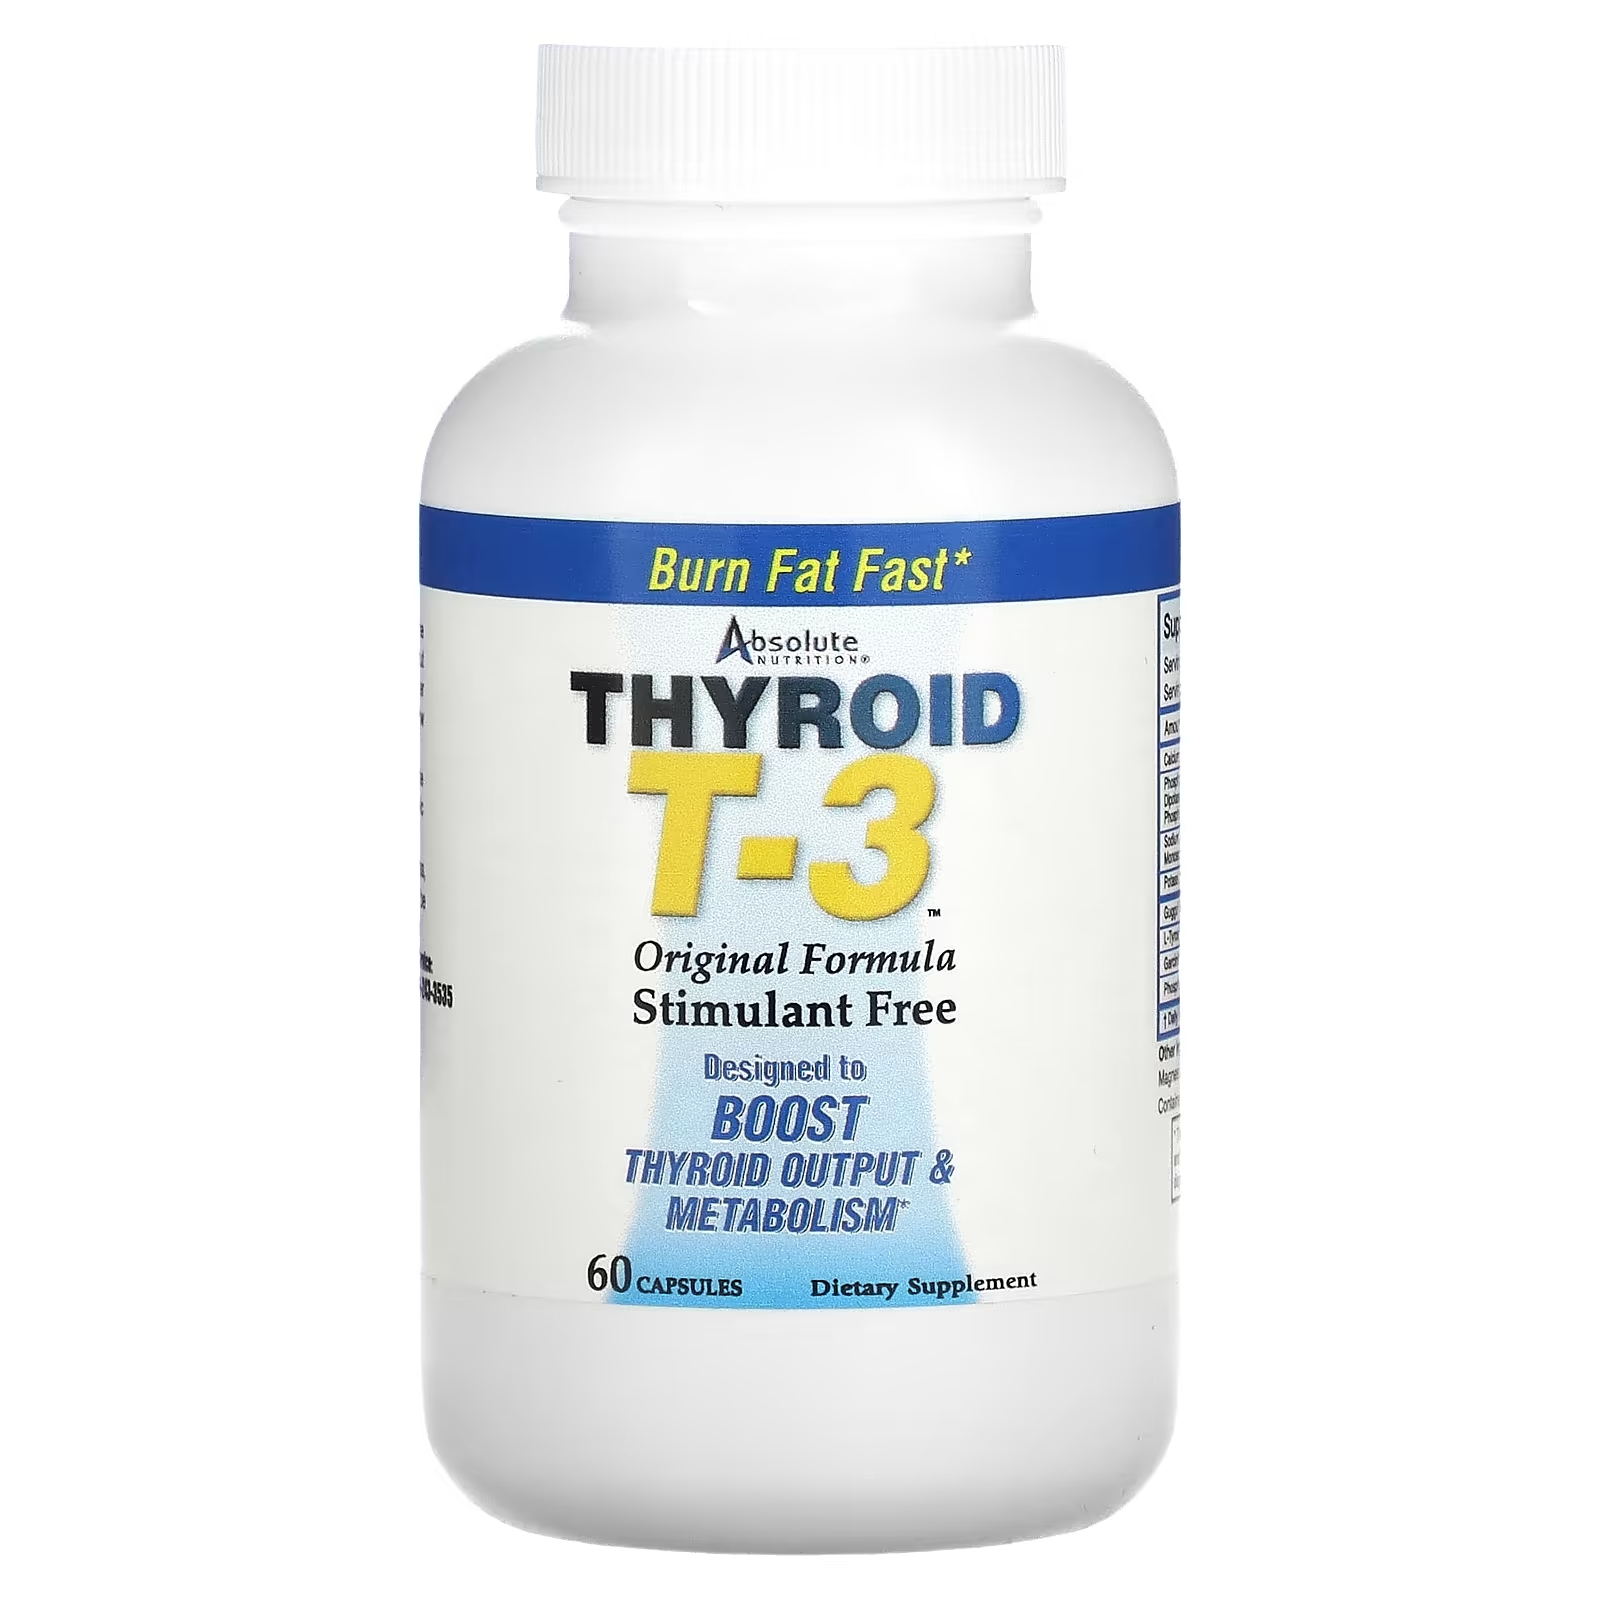 Absolute Nutrition Thyroid T-3 для щитовидной железы оригинальная формула, 60 капсул zahler thyraid формула для поддержки щитовидной железы 60 капсул